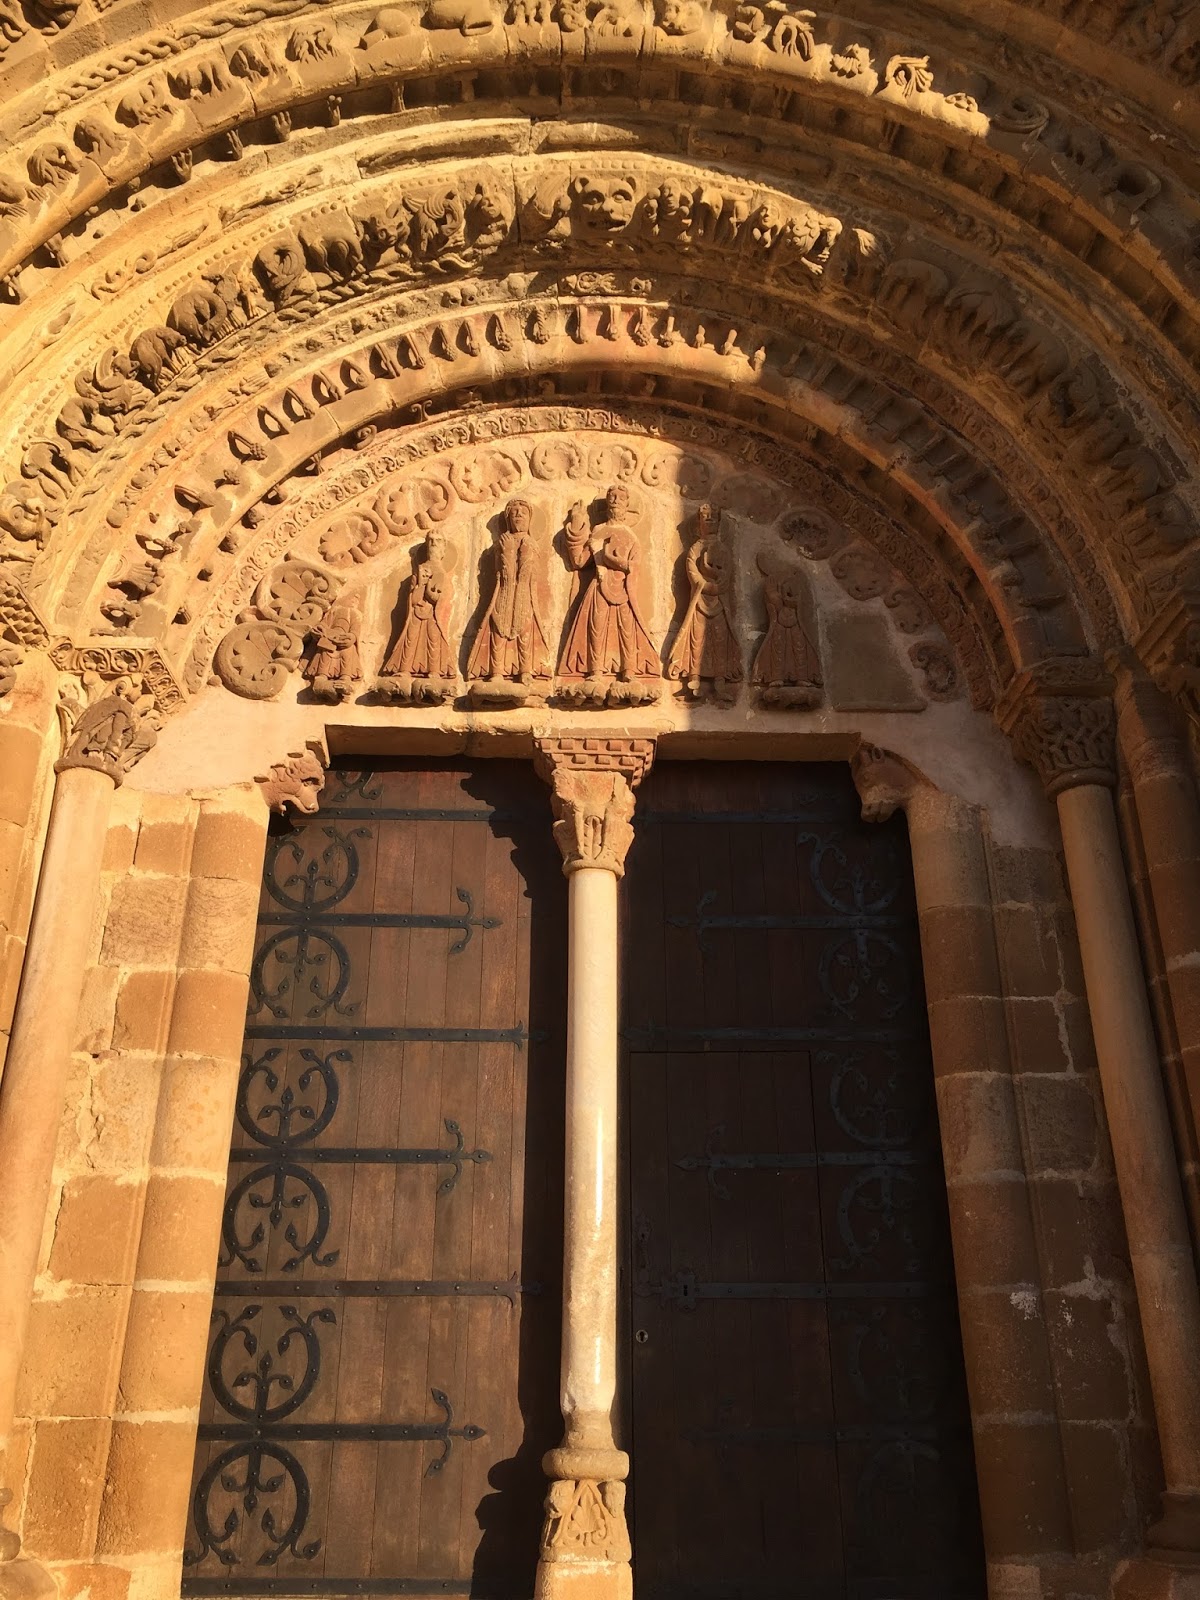 Façade of the Leyre Monastery